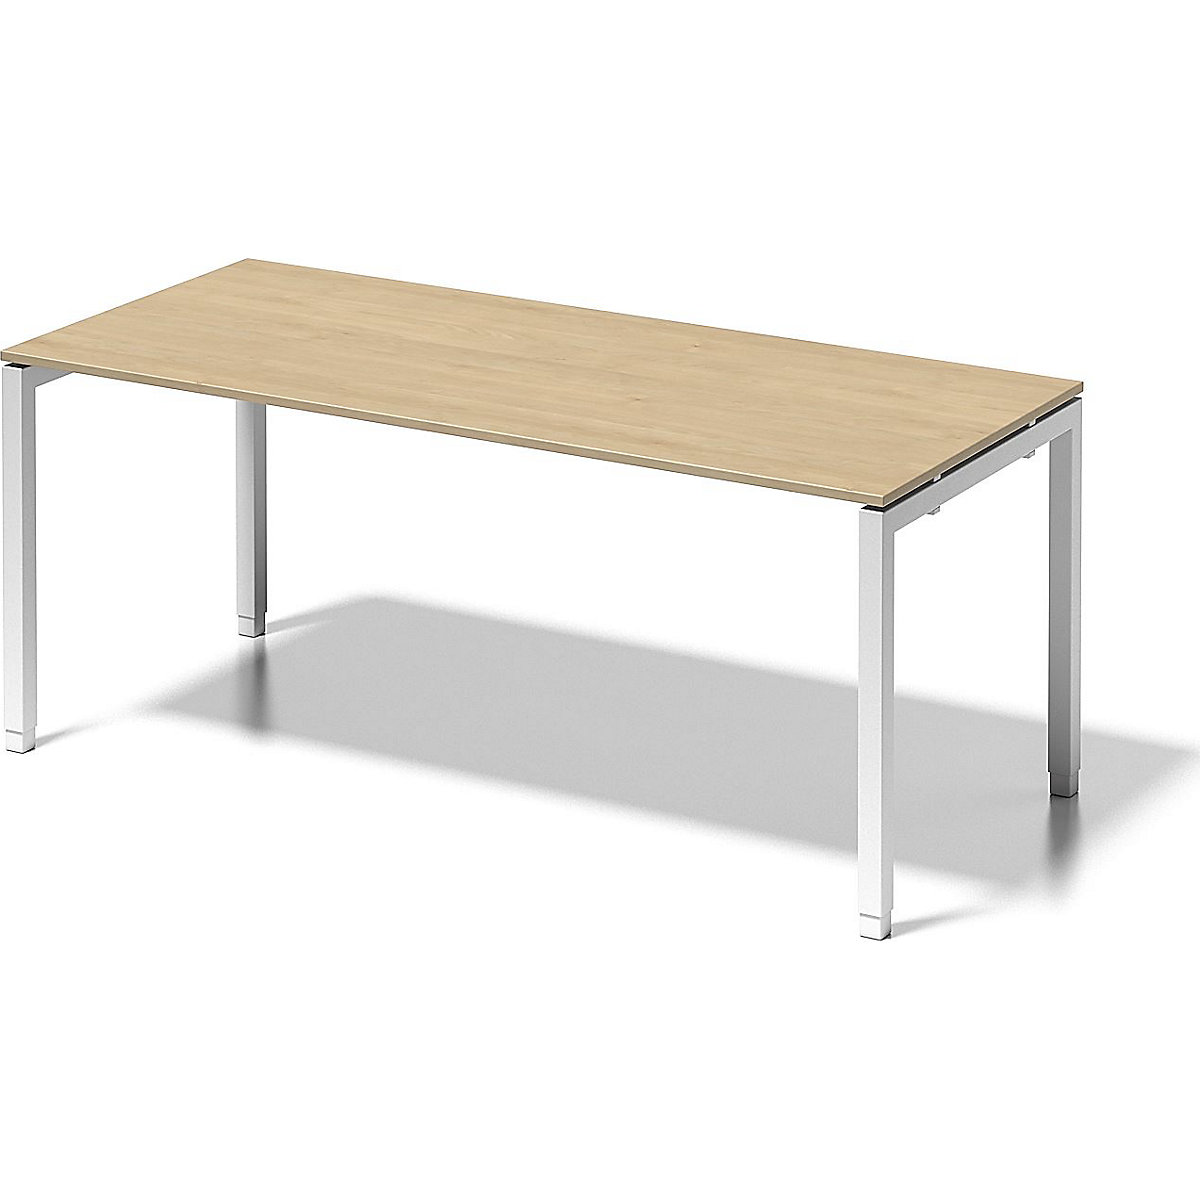 CITO desk, U-frame – BISLEY, HxWxD 650 – 850 x 1800 x 800 mm, white frame, maple tabletop-2